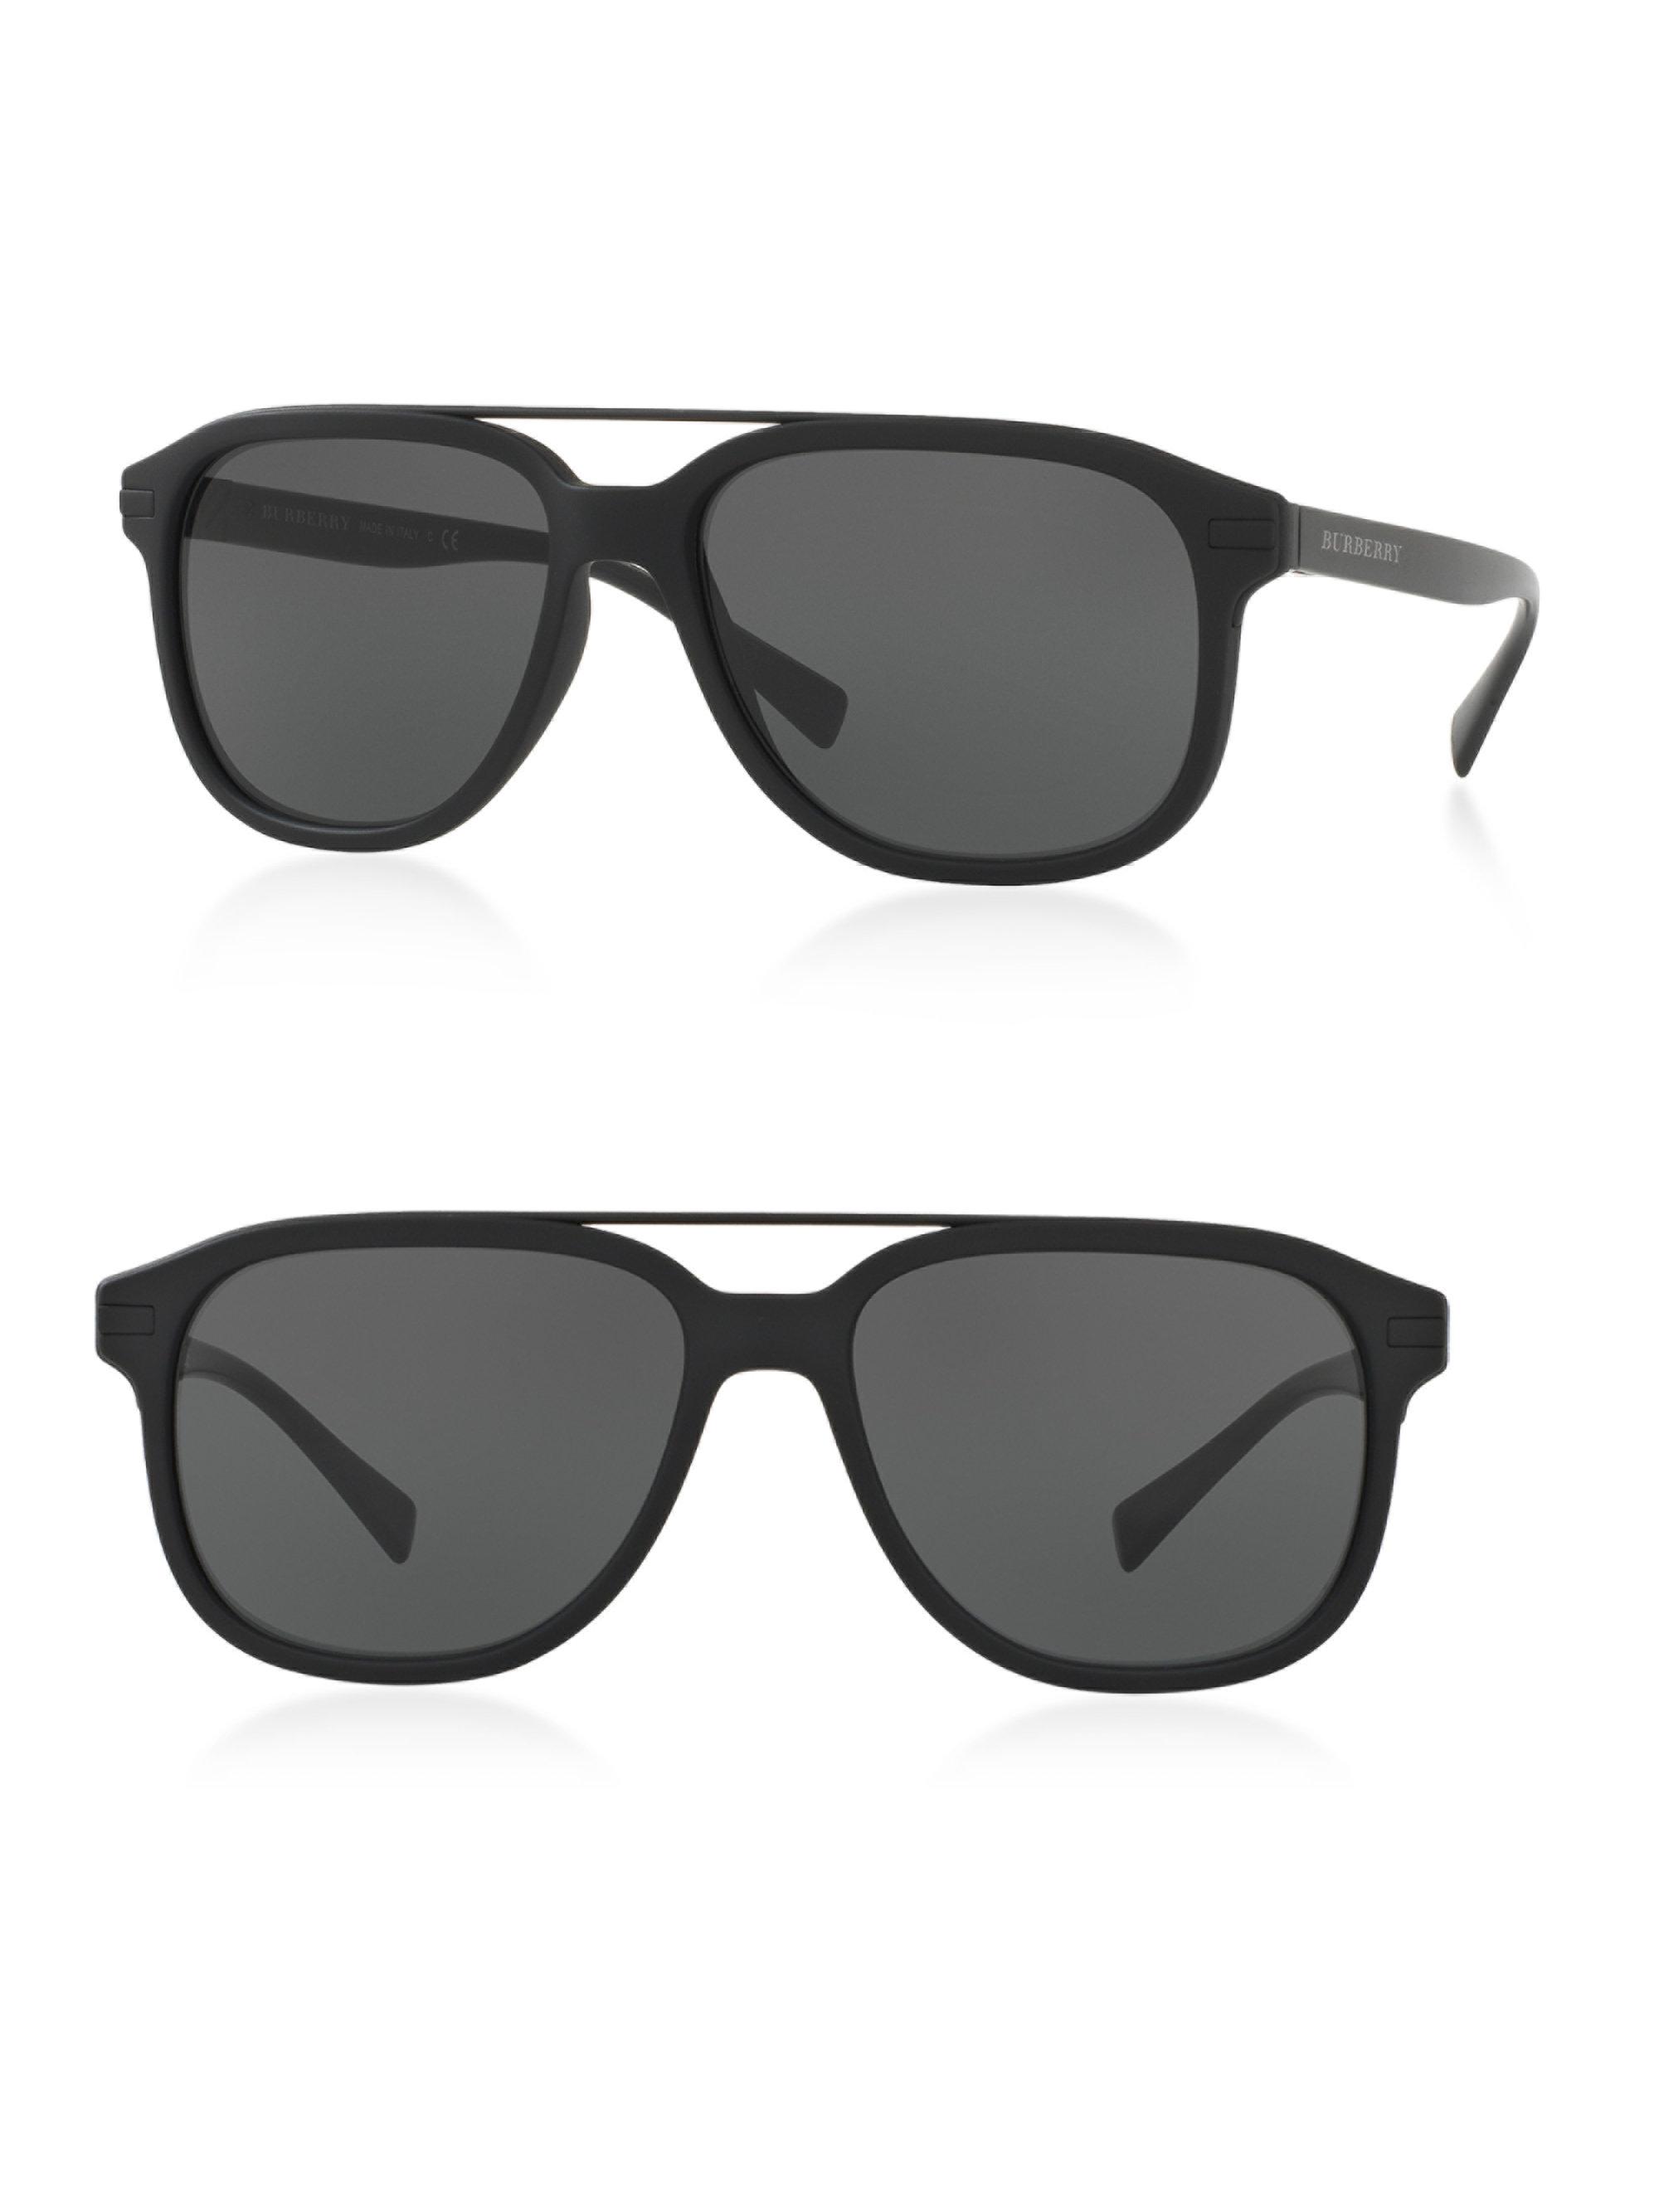 Lyst - Burberry 58mm Square Sunglasses in Black for Men